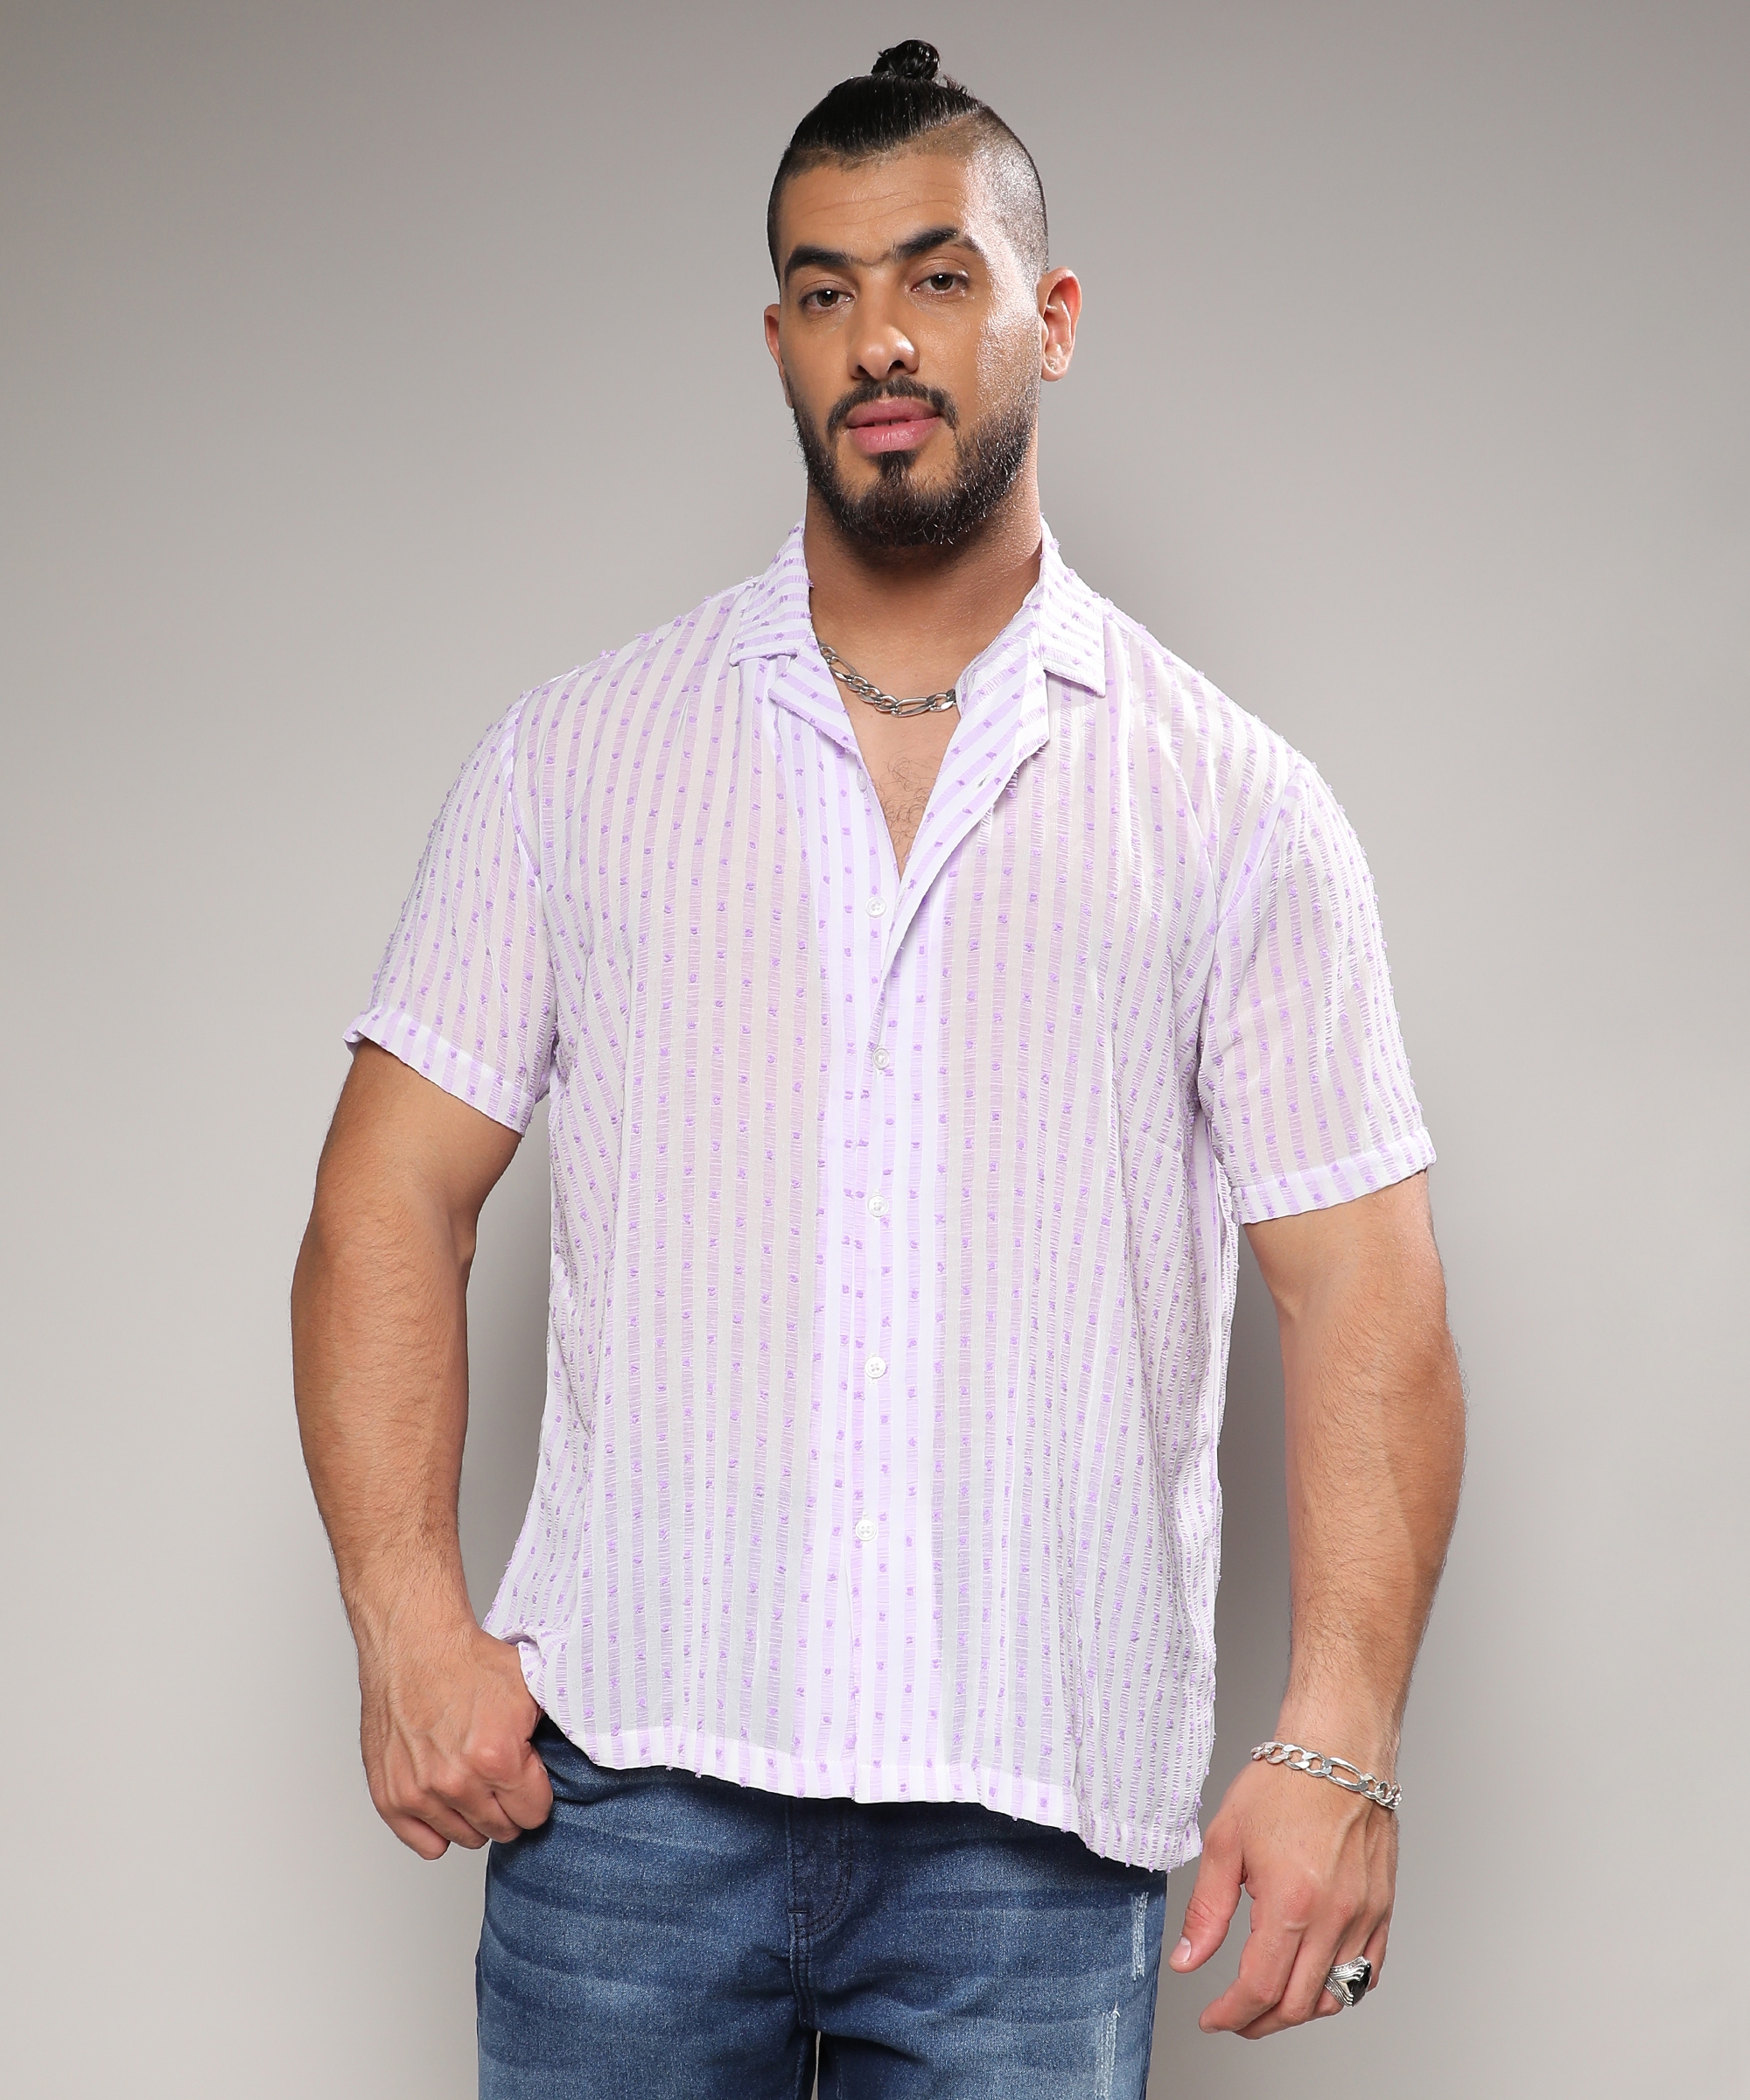 Instafab Plus | Men's White & Lavender Balanced Striped Shirt